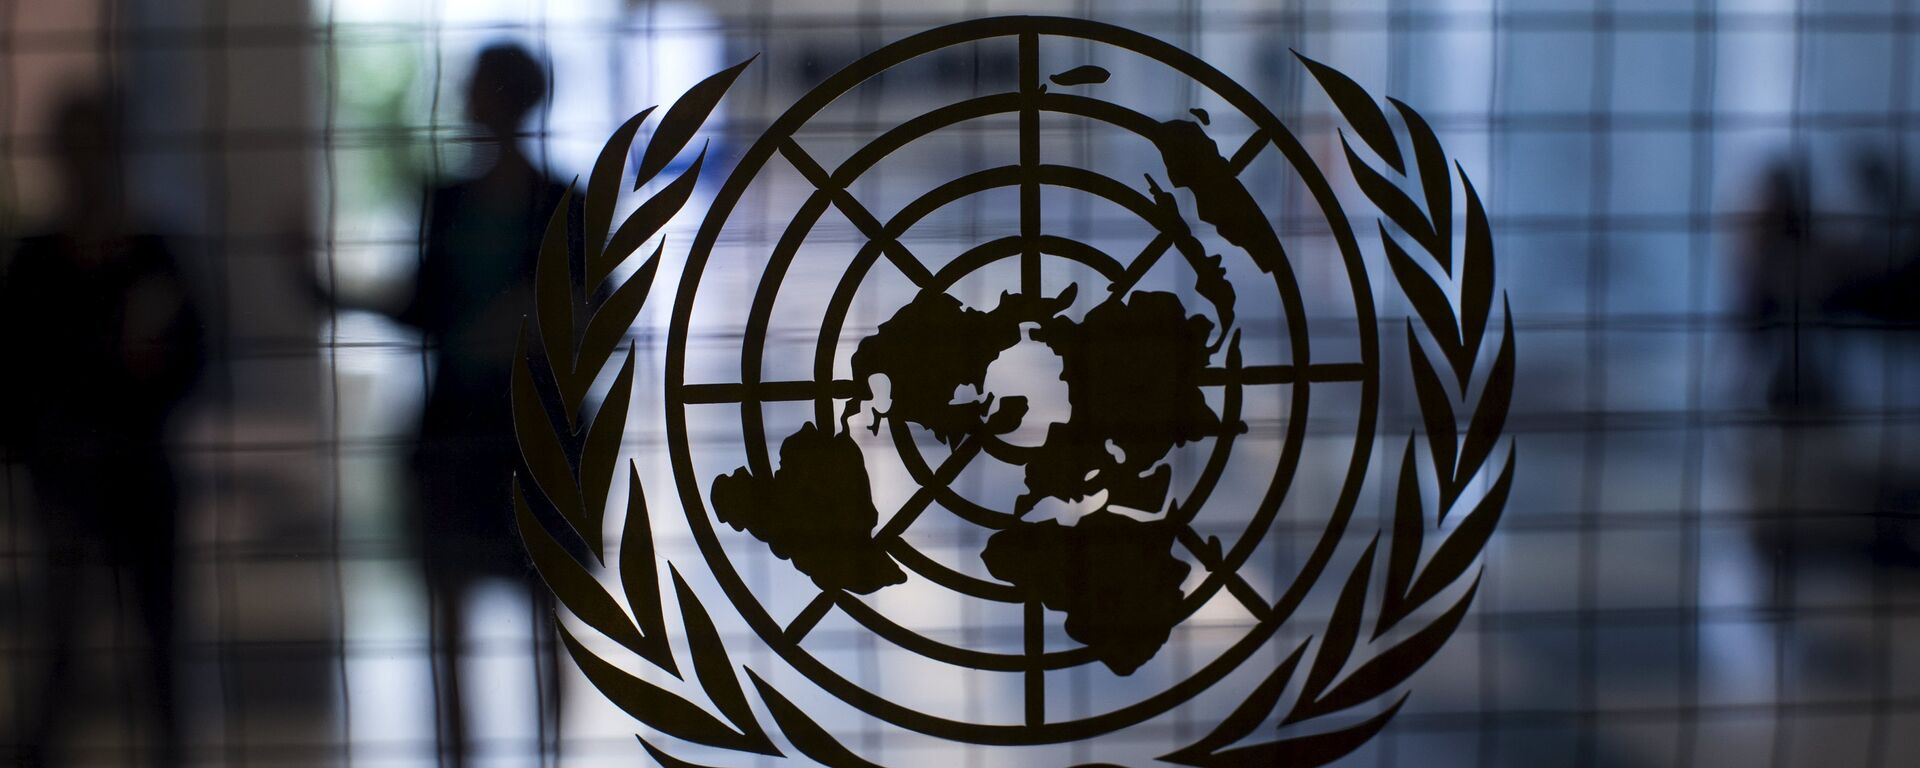 Logo de la ONU - Sputnik Mundo, 1920, 05.08.2021